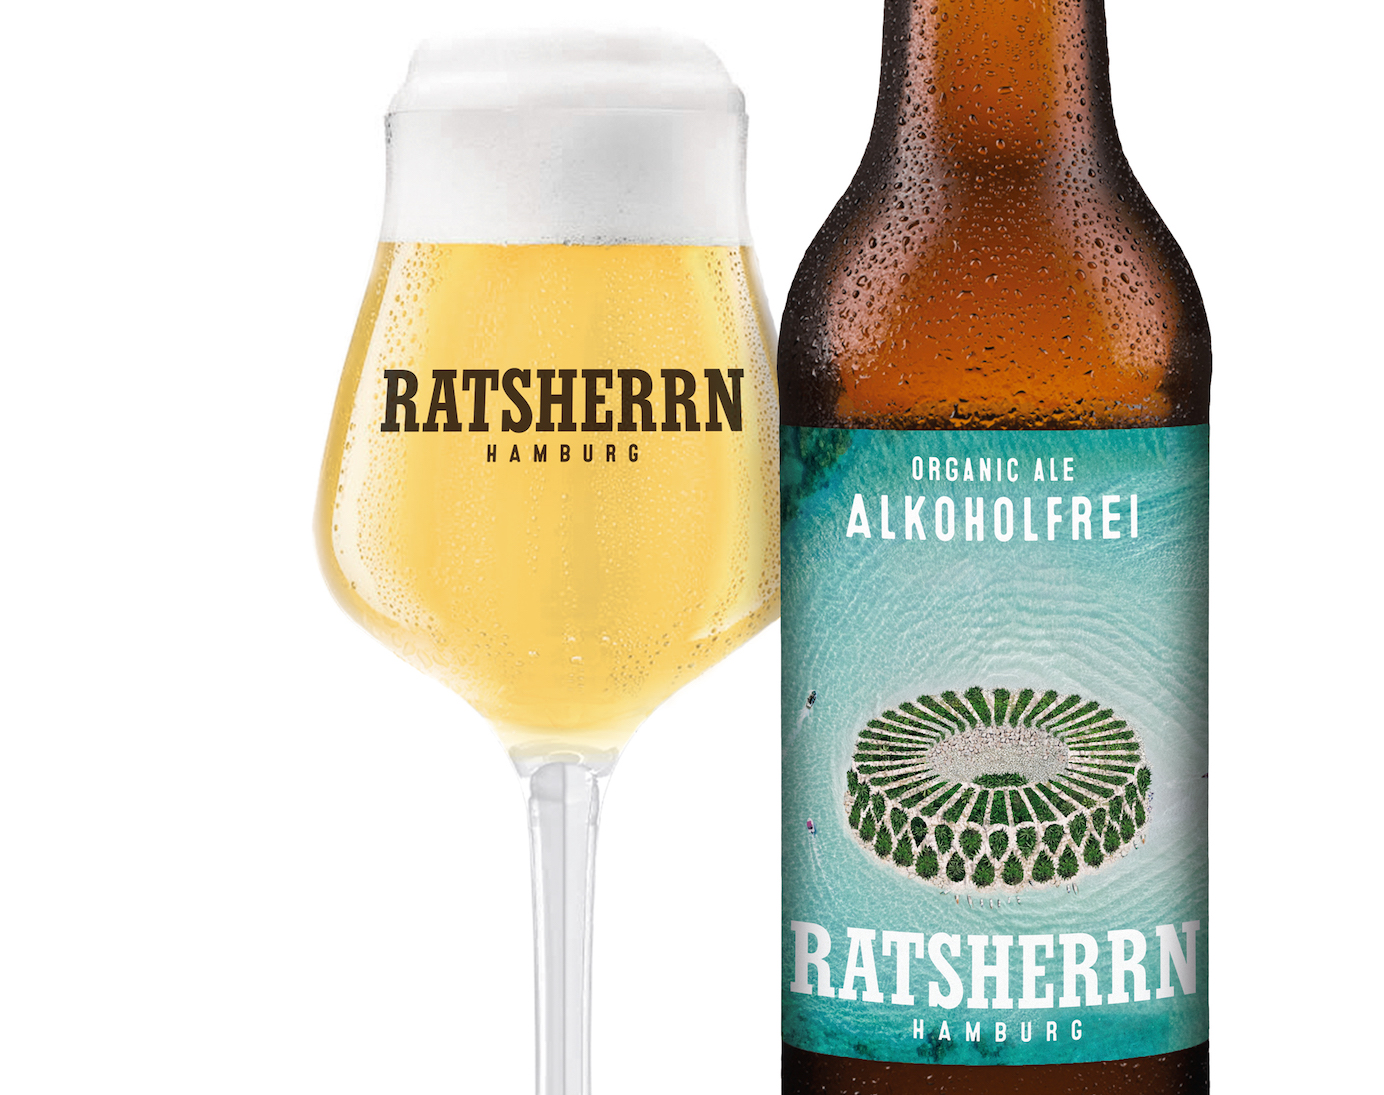 Ratsherrn Organic Ale Alkoholfrei / Neue Bier auf HHopcast